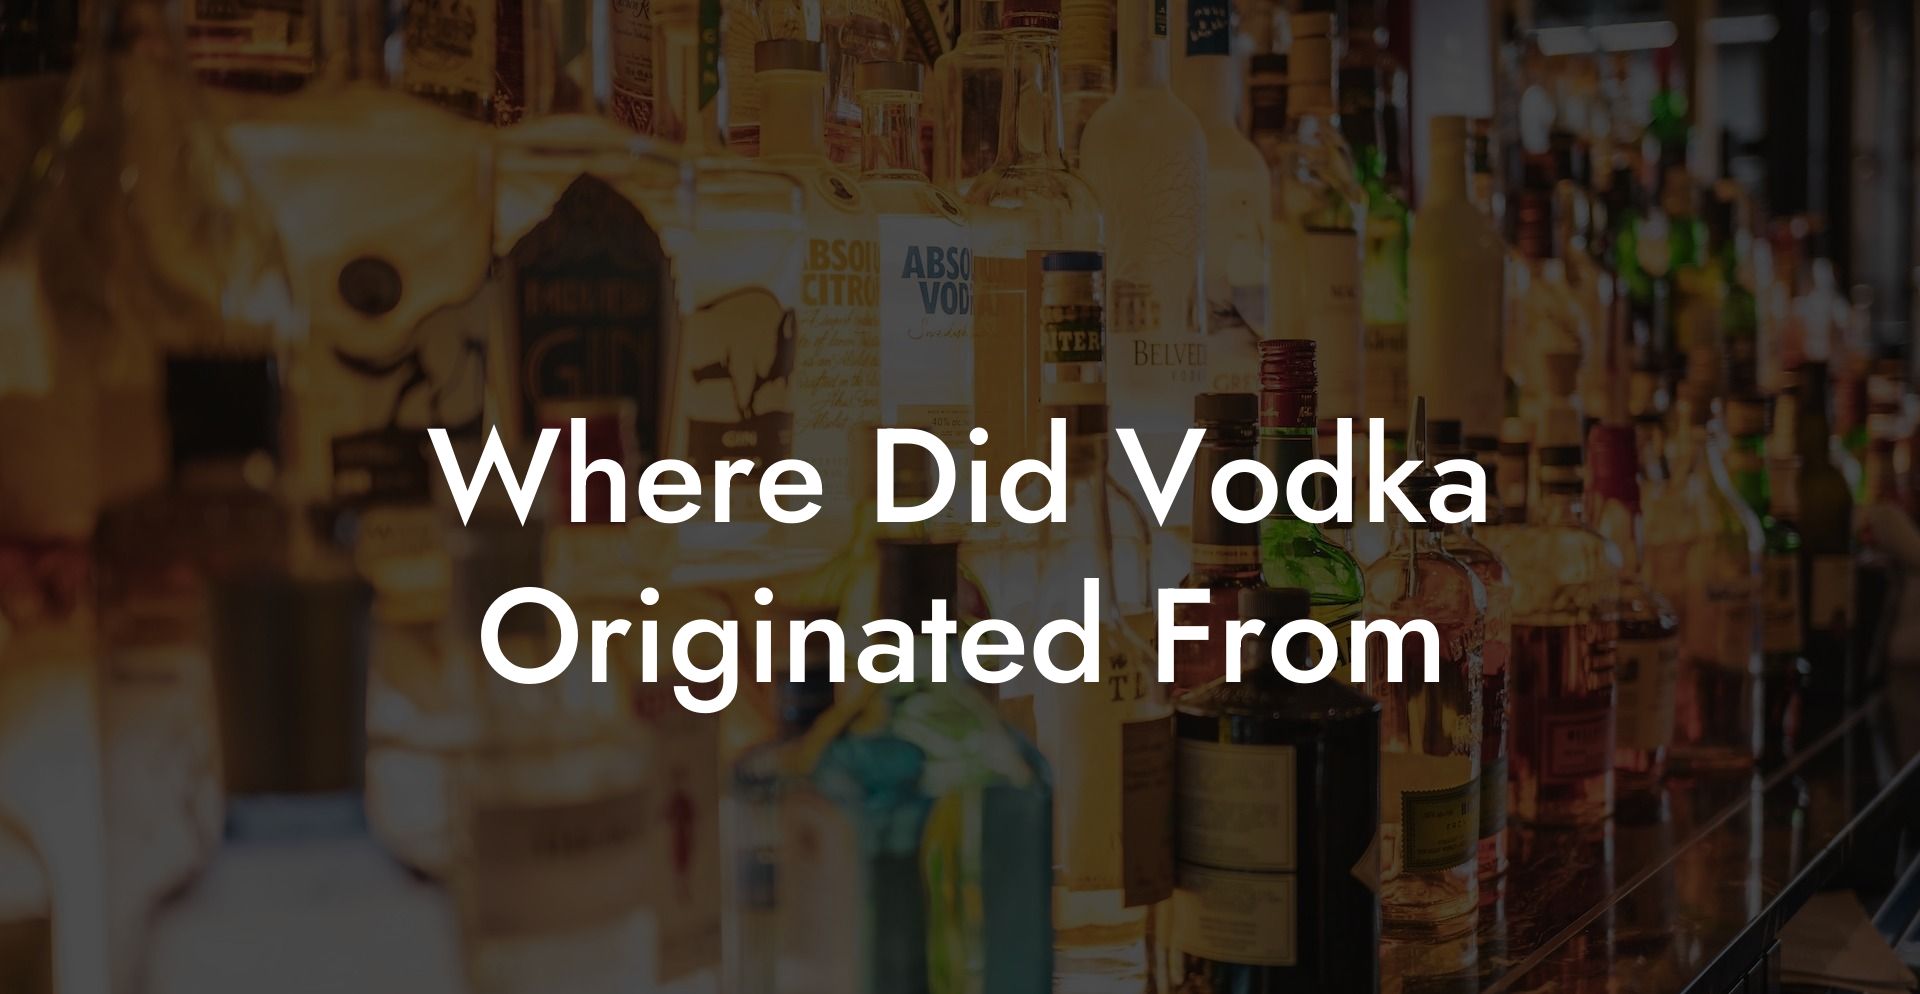 Where Did Vodka Originated From